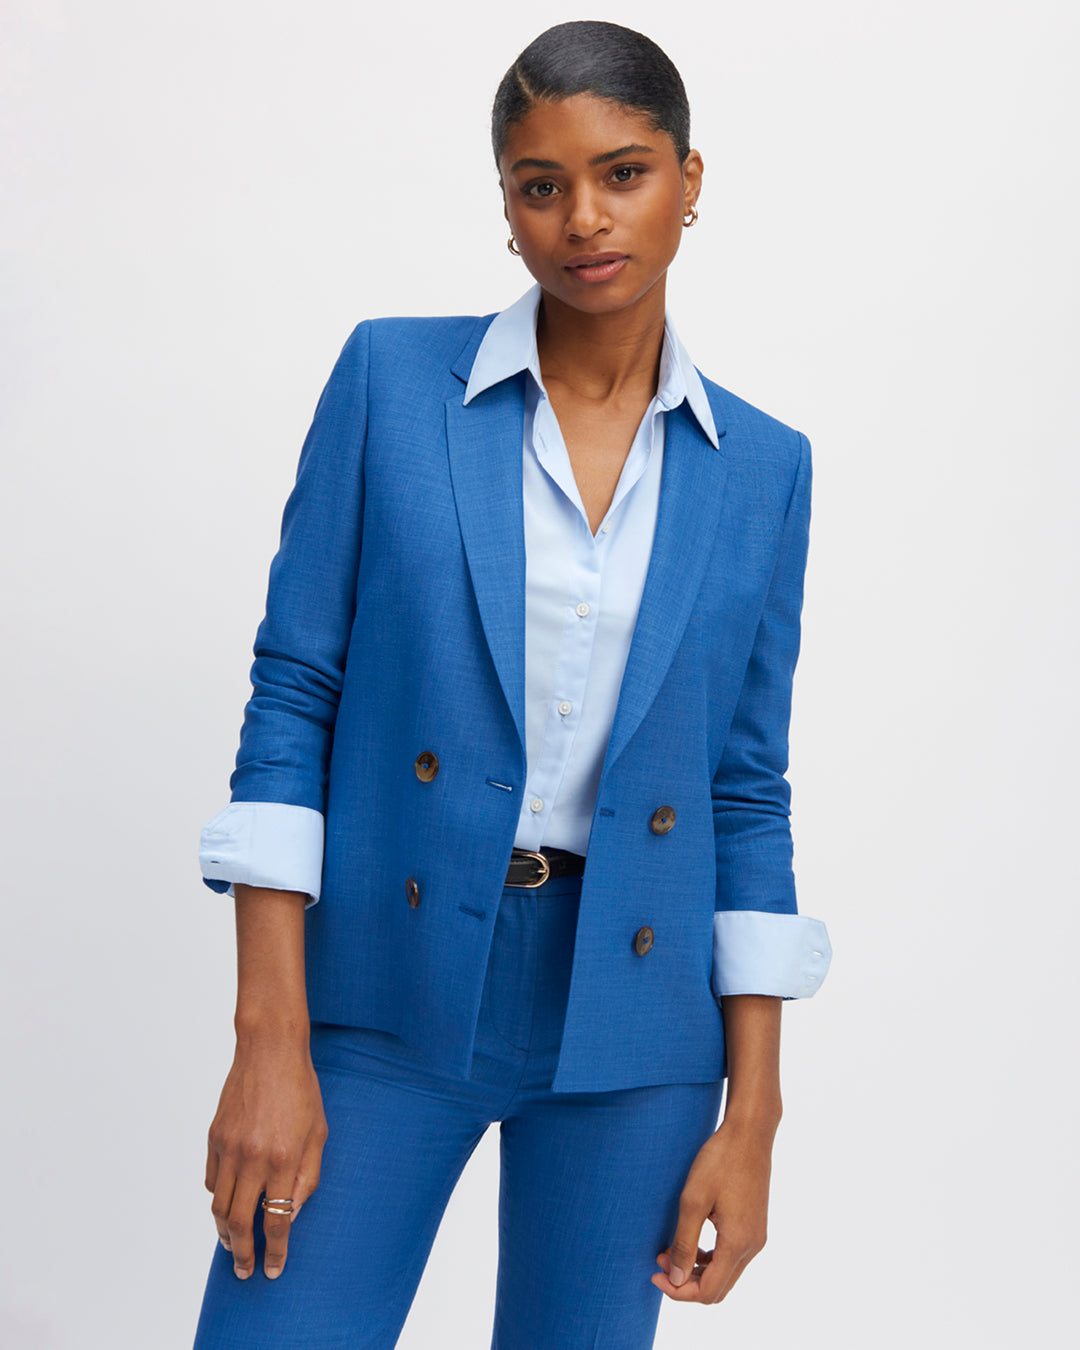 jacket-blue-azur-cut-right-crossed-double-button-collar-suit-entirely-lined-17H10-suit-for-women-paris-